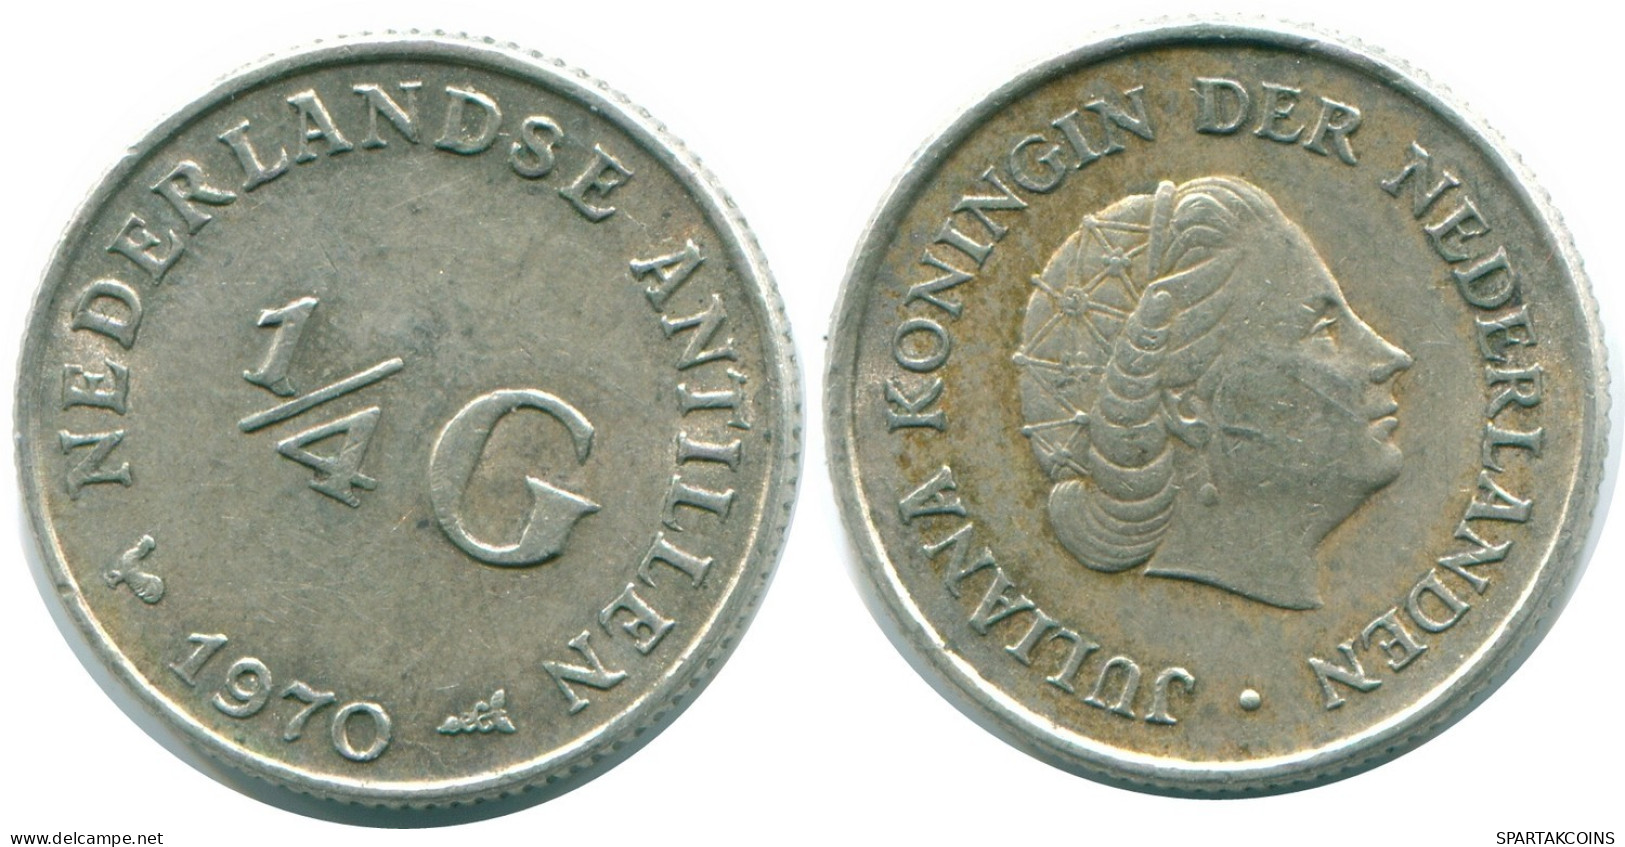 1/4 GULDEN 1970 NETHERLANDS ANTILLES SILVER Colonial Coin #NL11688.4.U.A - Niederländische Antillen